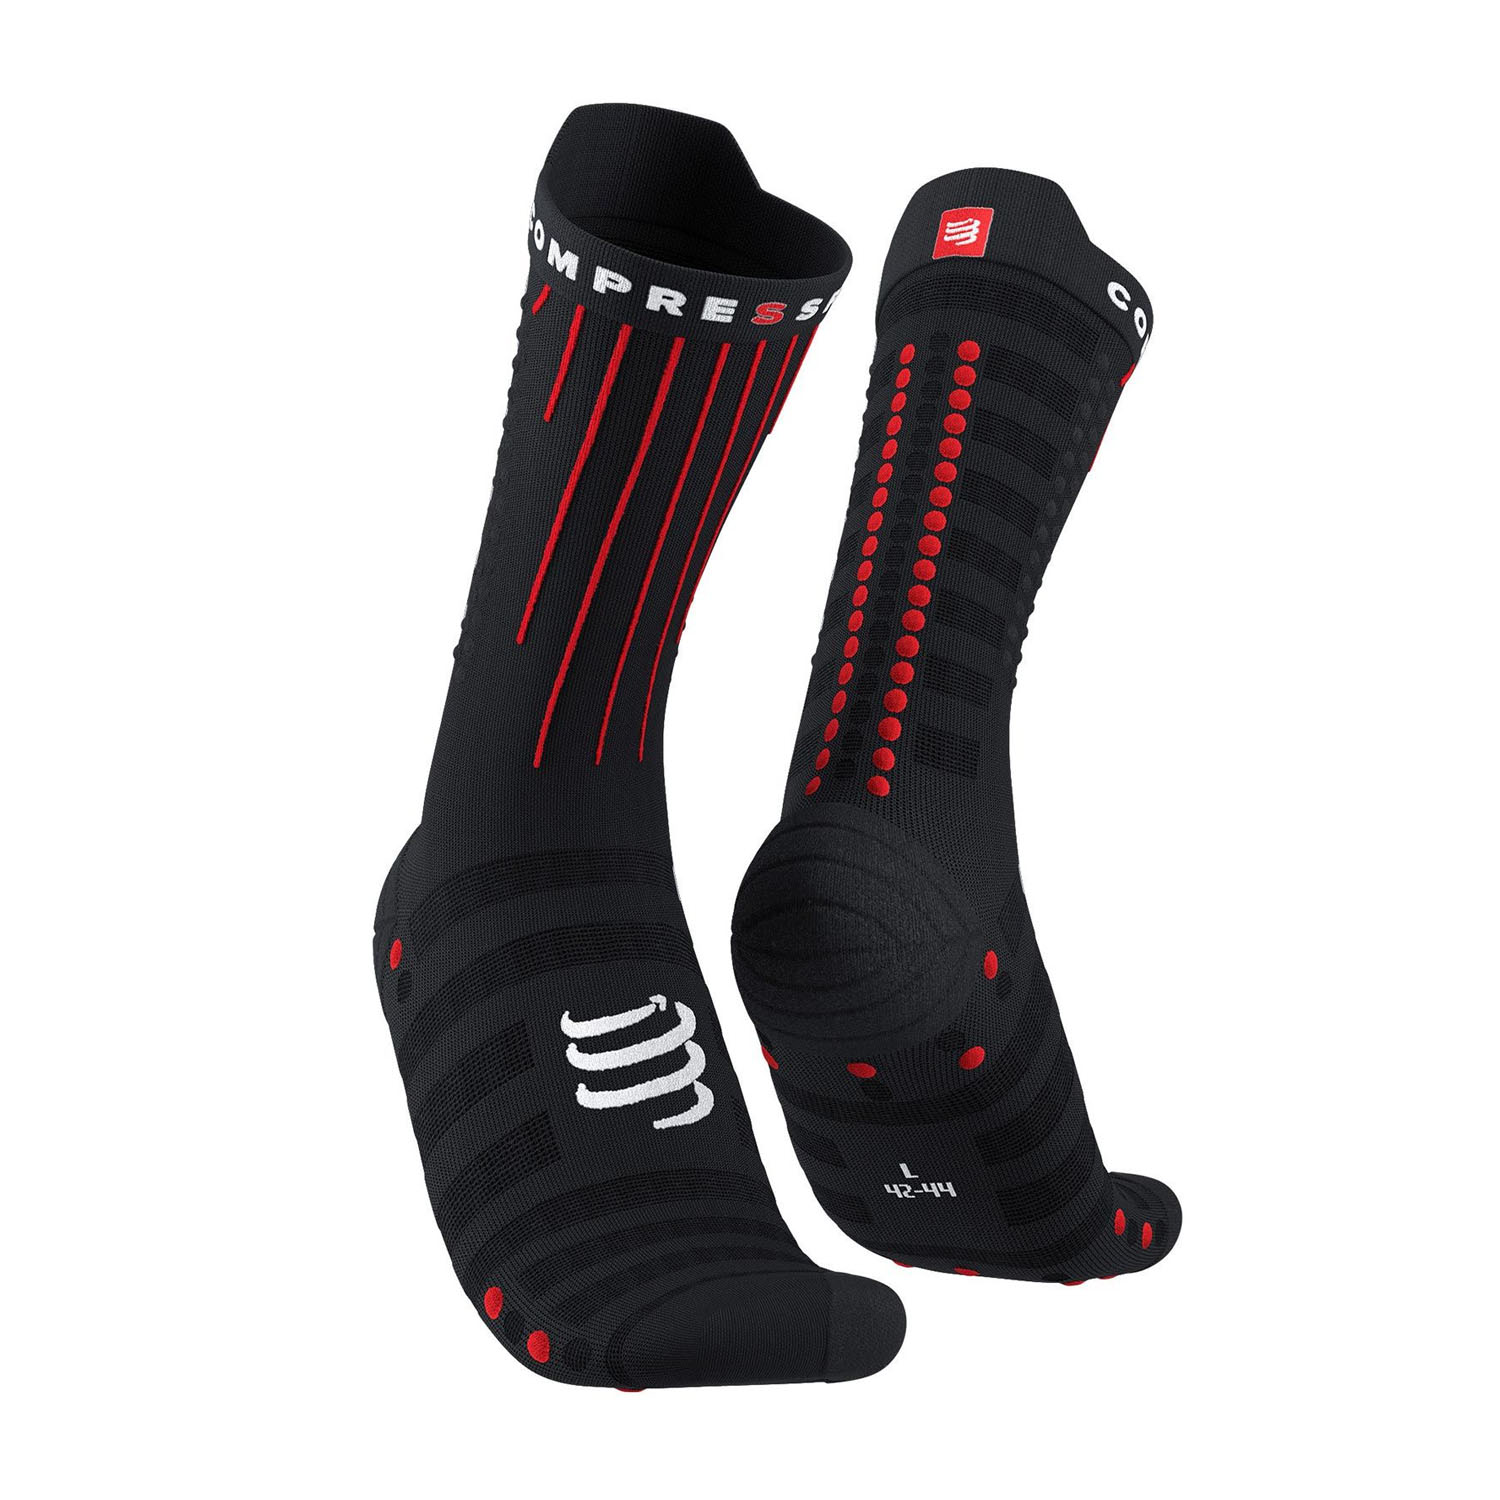 Compressport Aero Socks - Black/Red